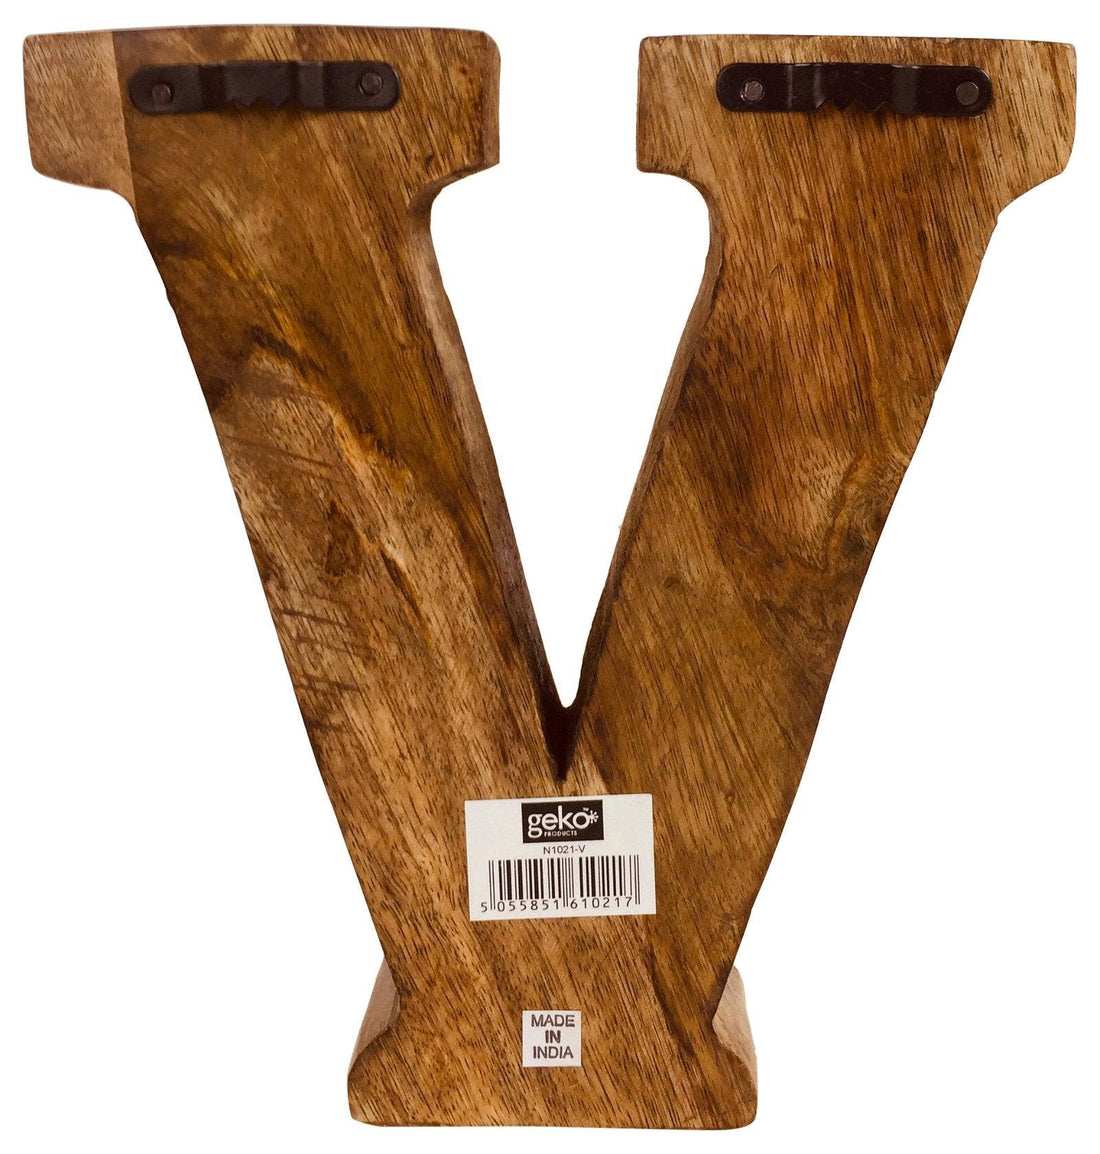 Hand Carved Wooden Geometric Letter V - £12.99 - Single Letters 